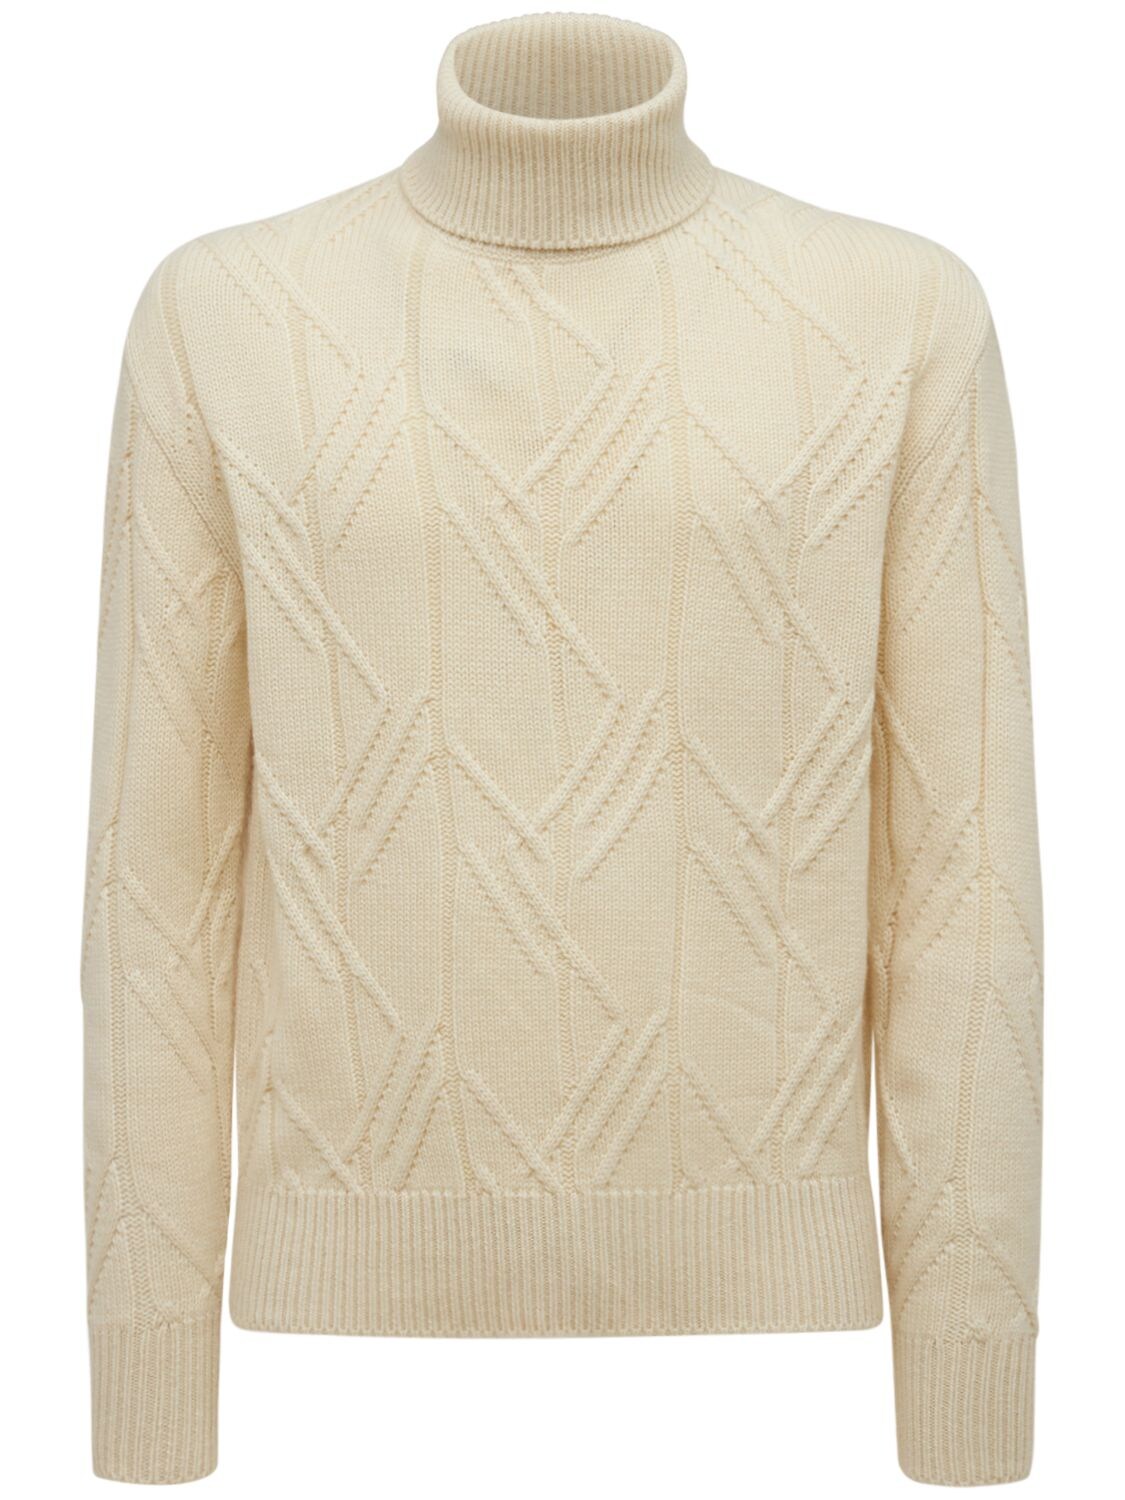 Hawick Cashmere Knit Turtleneck Sweater